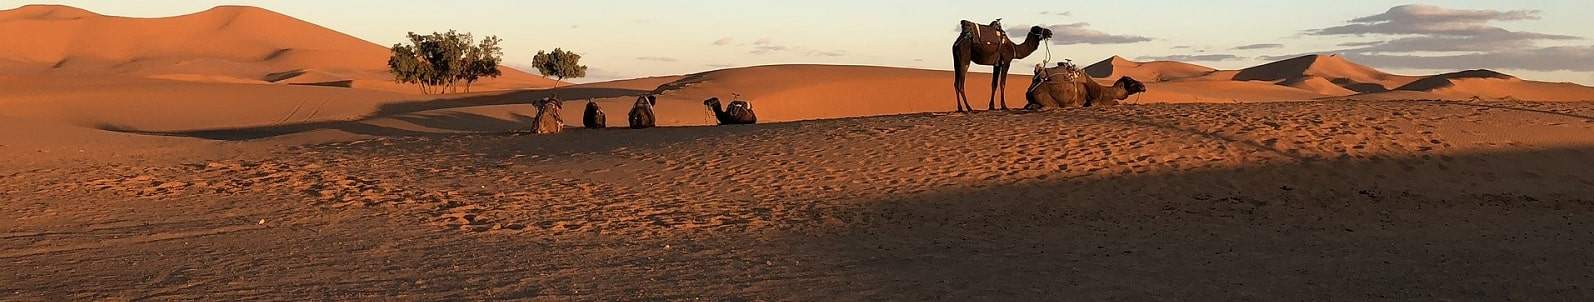 excursion marrakech désert, circuit désert marrakech